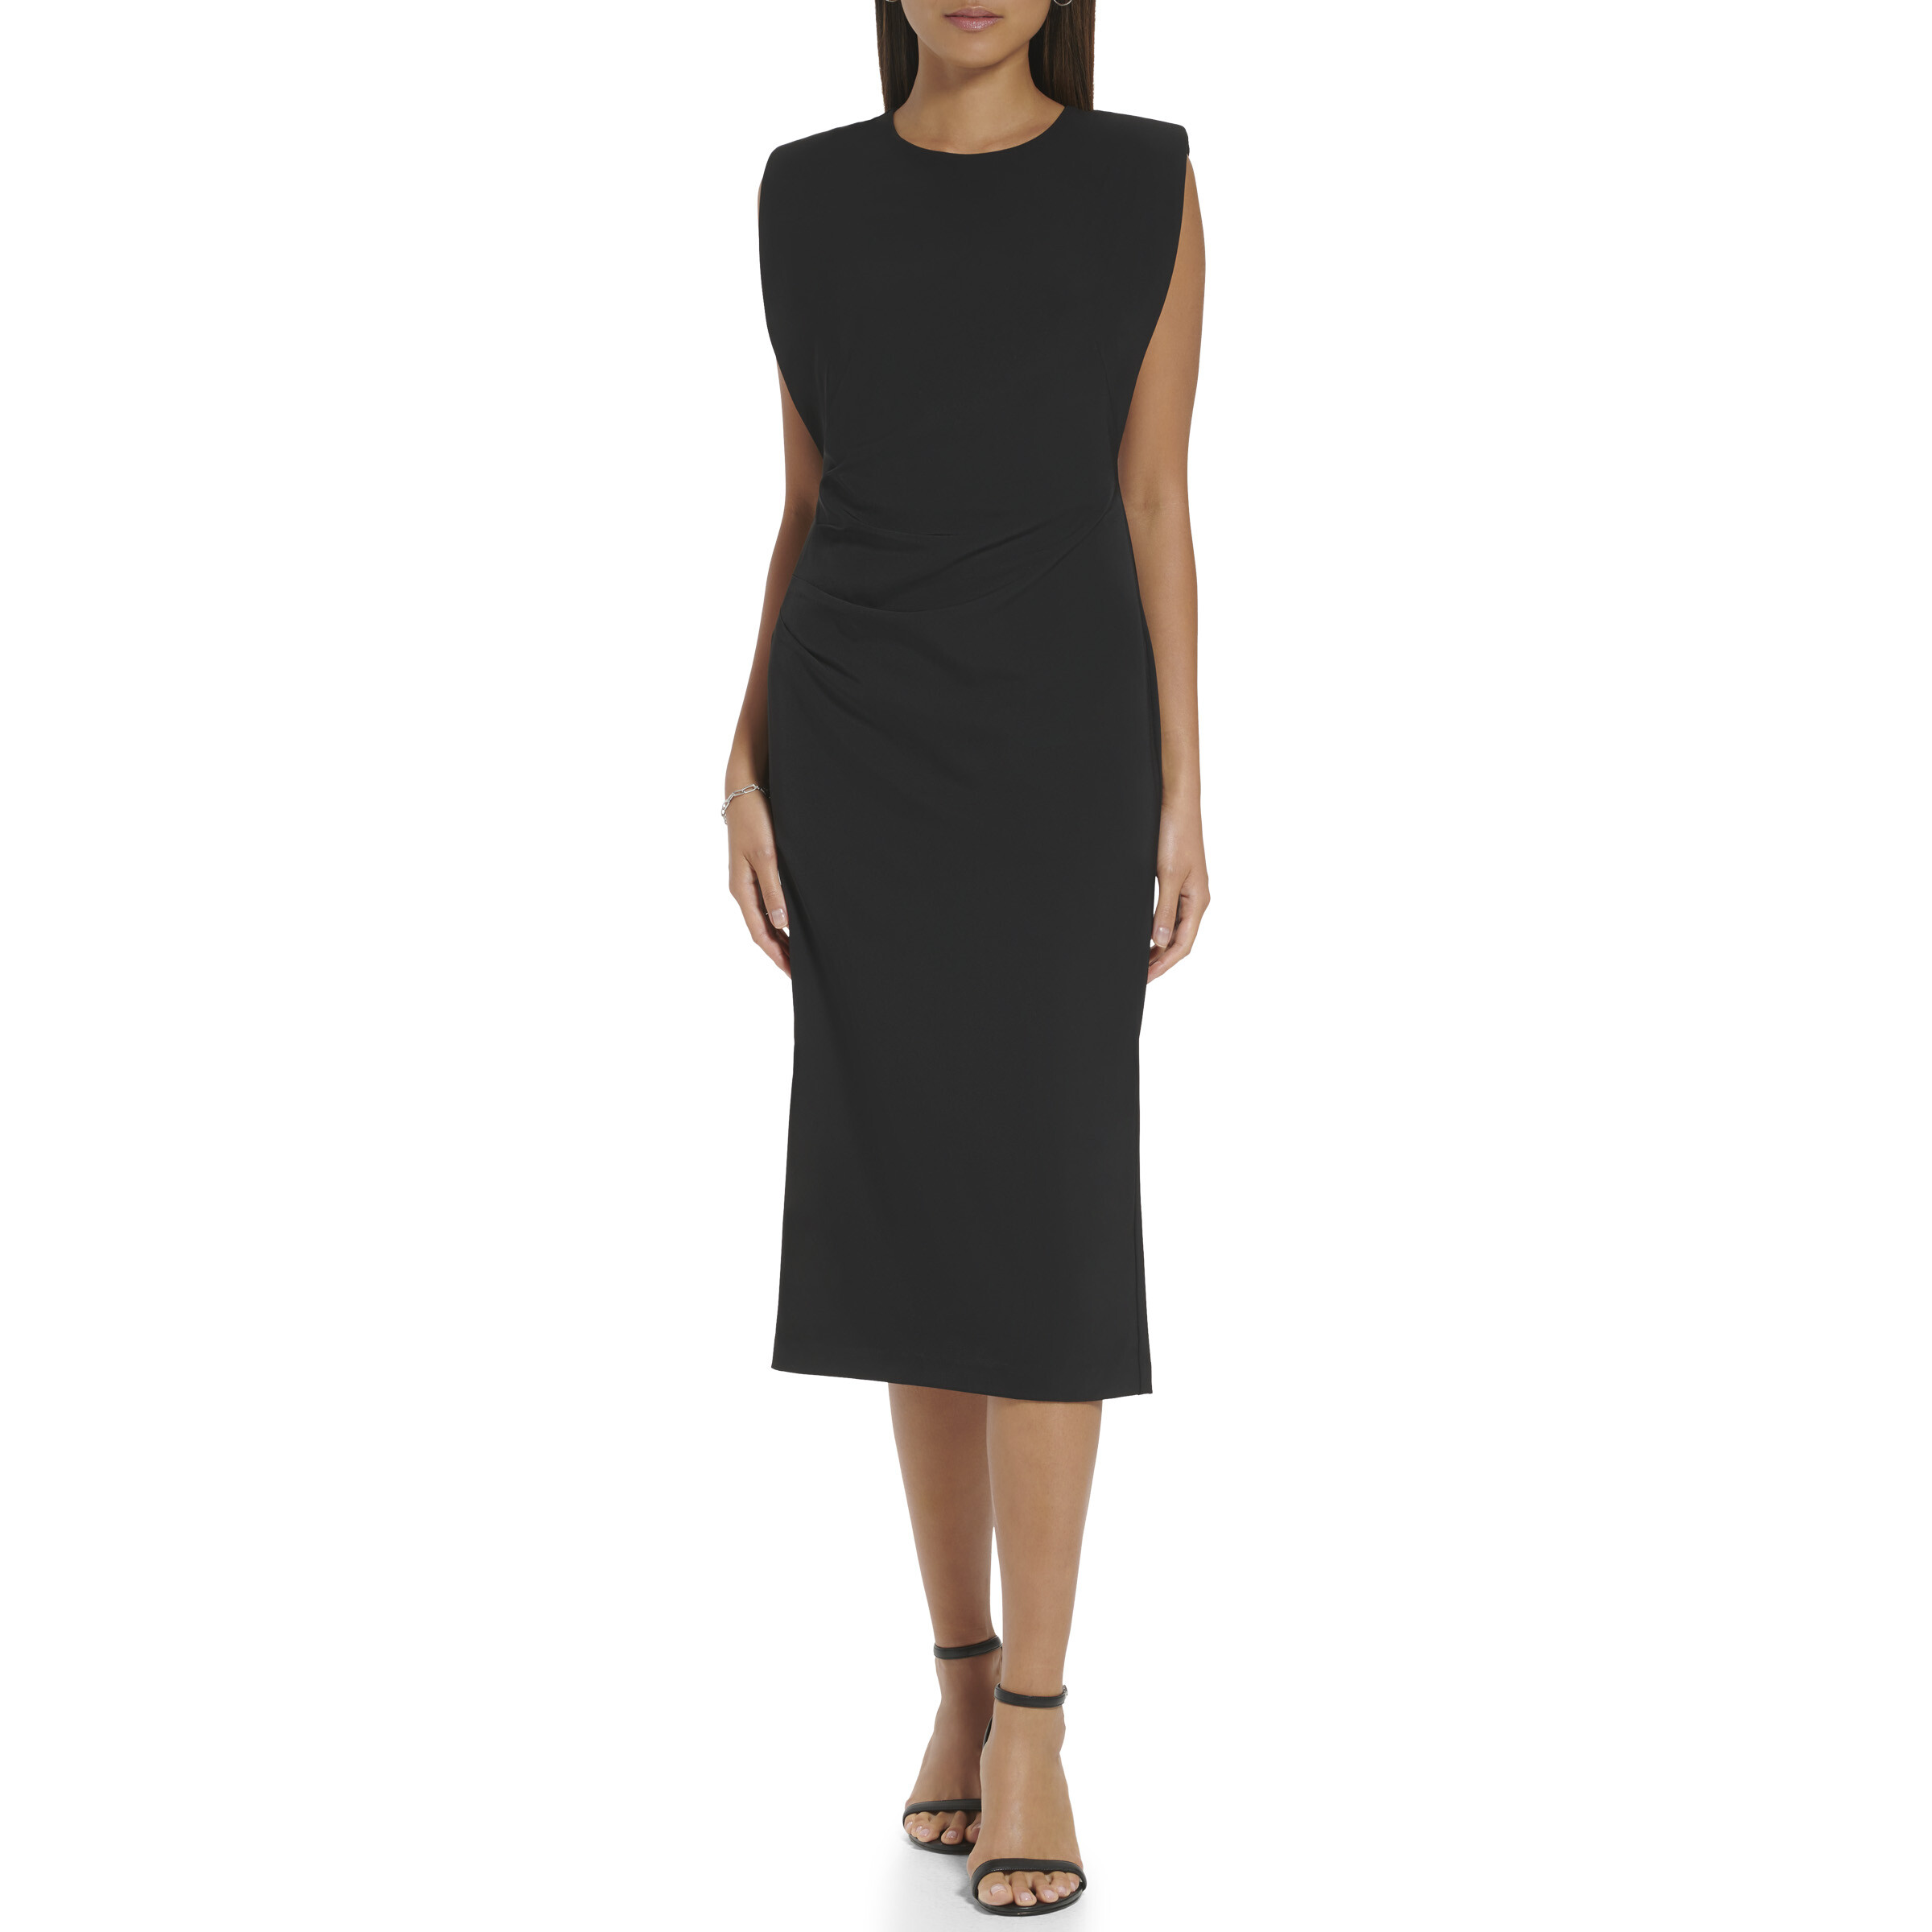 Imbracaminte Femei Calvin Klein String Shoulder Cinched Dress Black